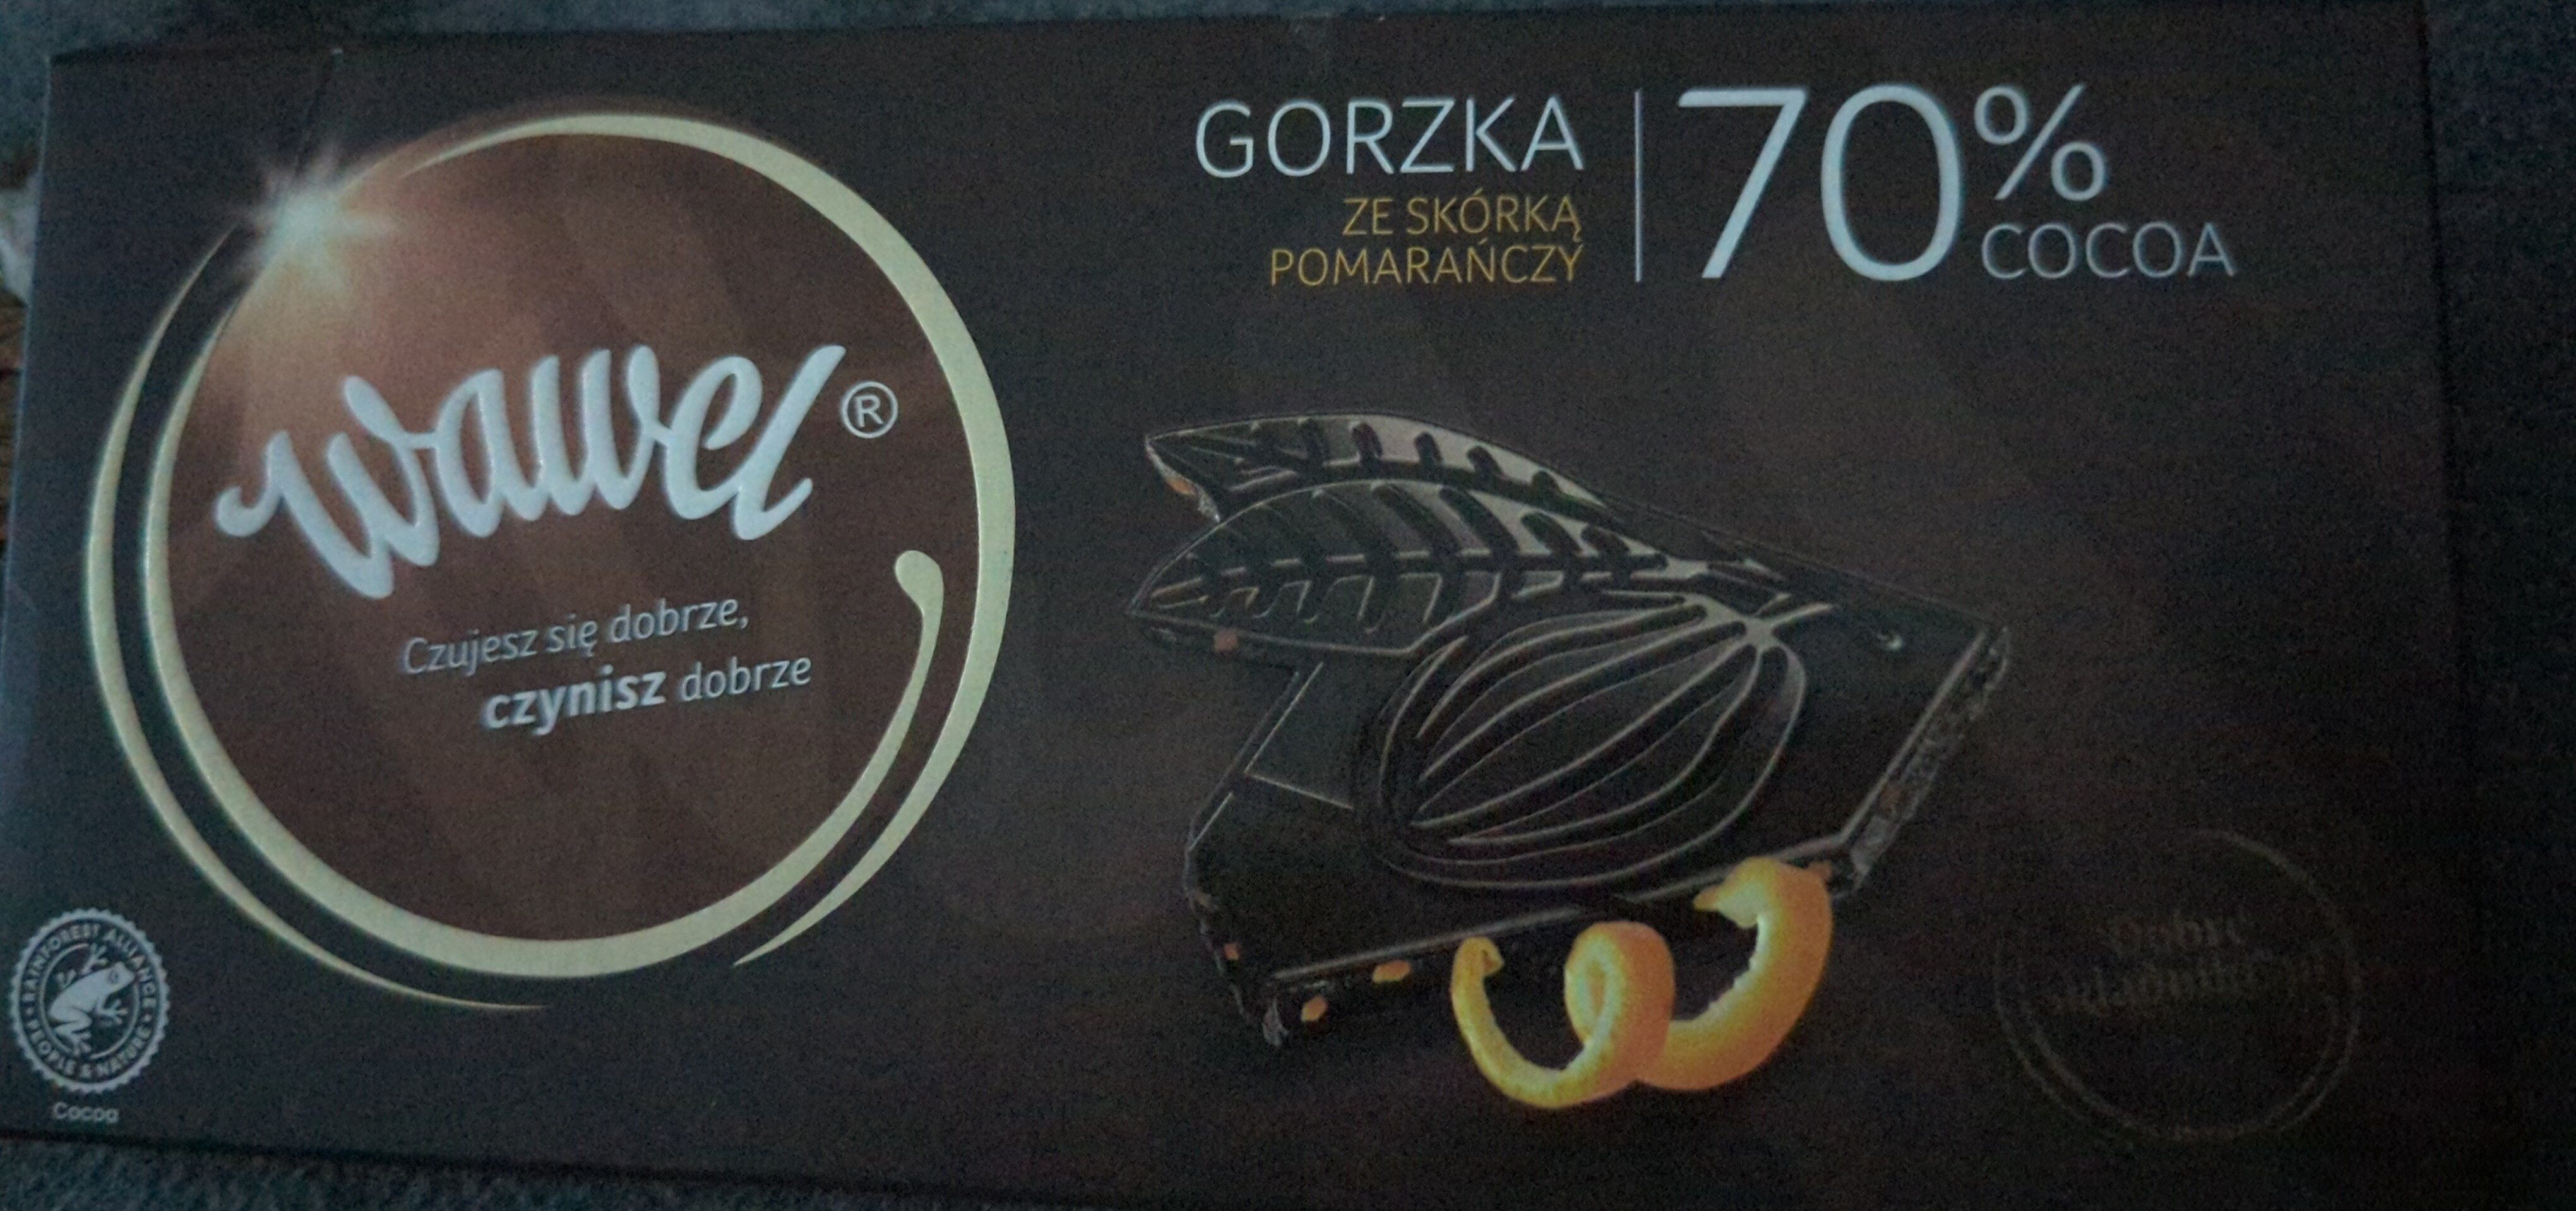 Gorzka 70% - Produkt